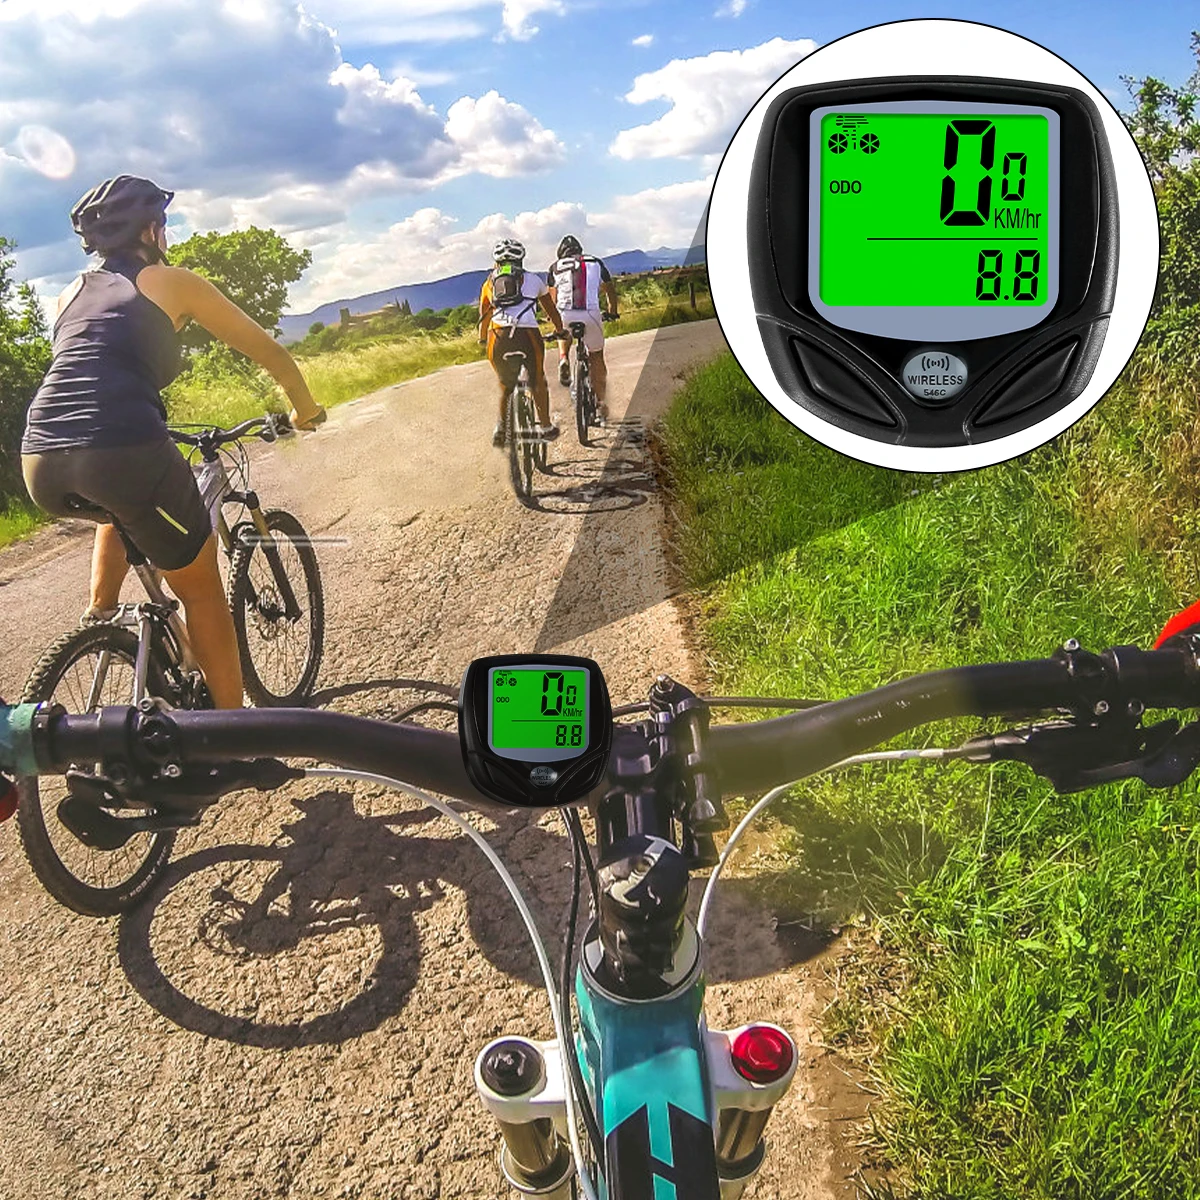 

Wireless Bike Computer Speedometer Waterproof Bike Odometer Multi-Functions Bicycle Mileage Tracker with Backlight LCD Display